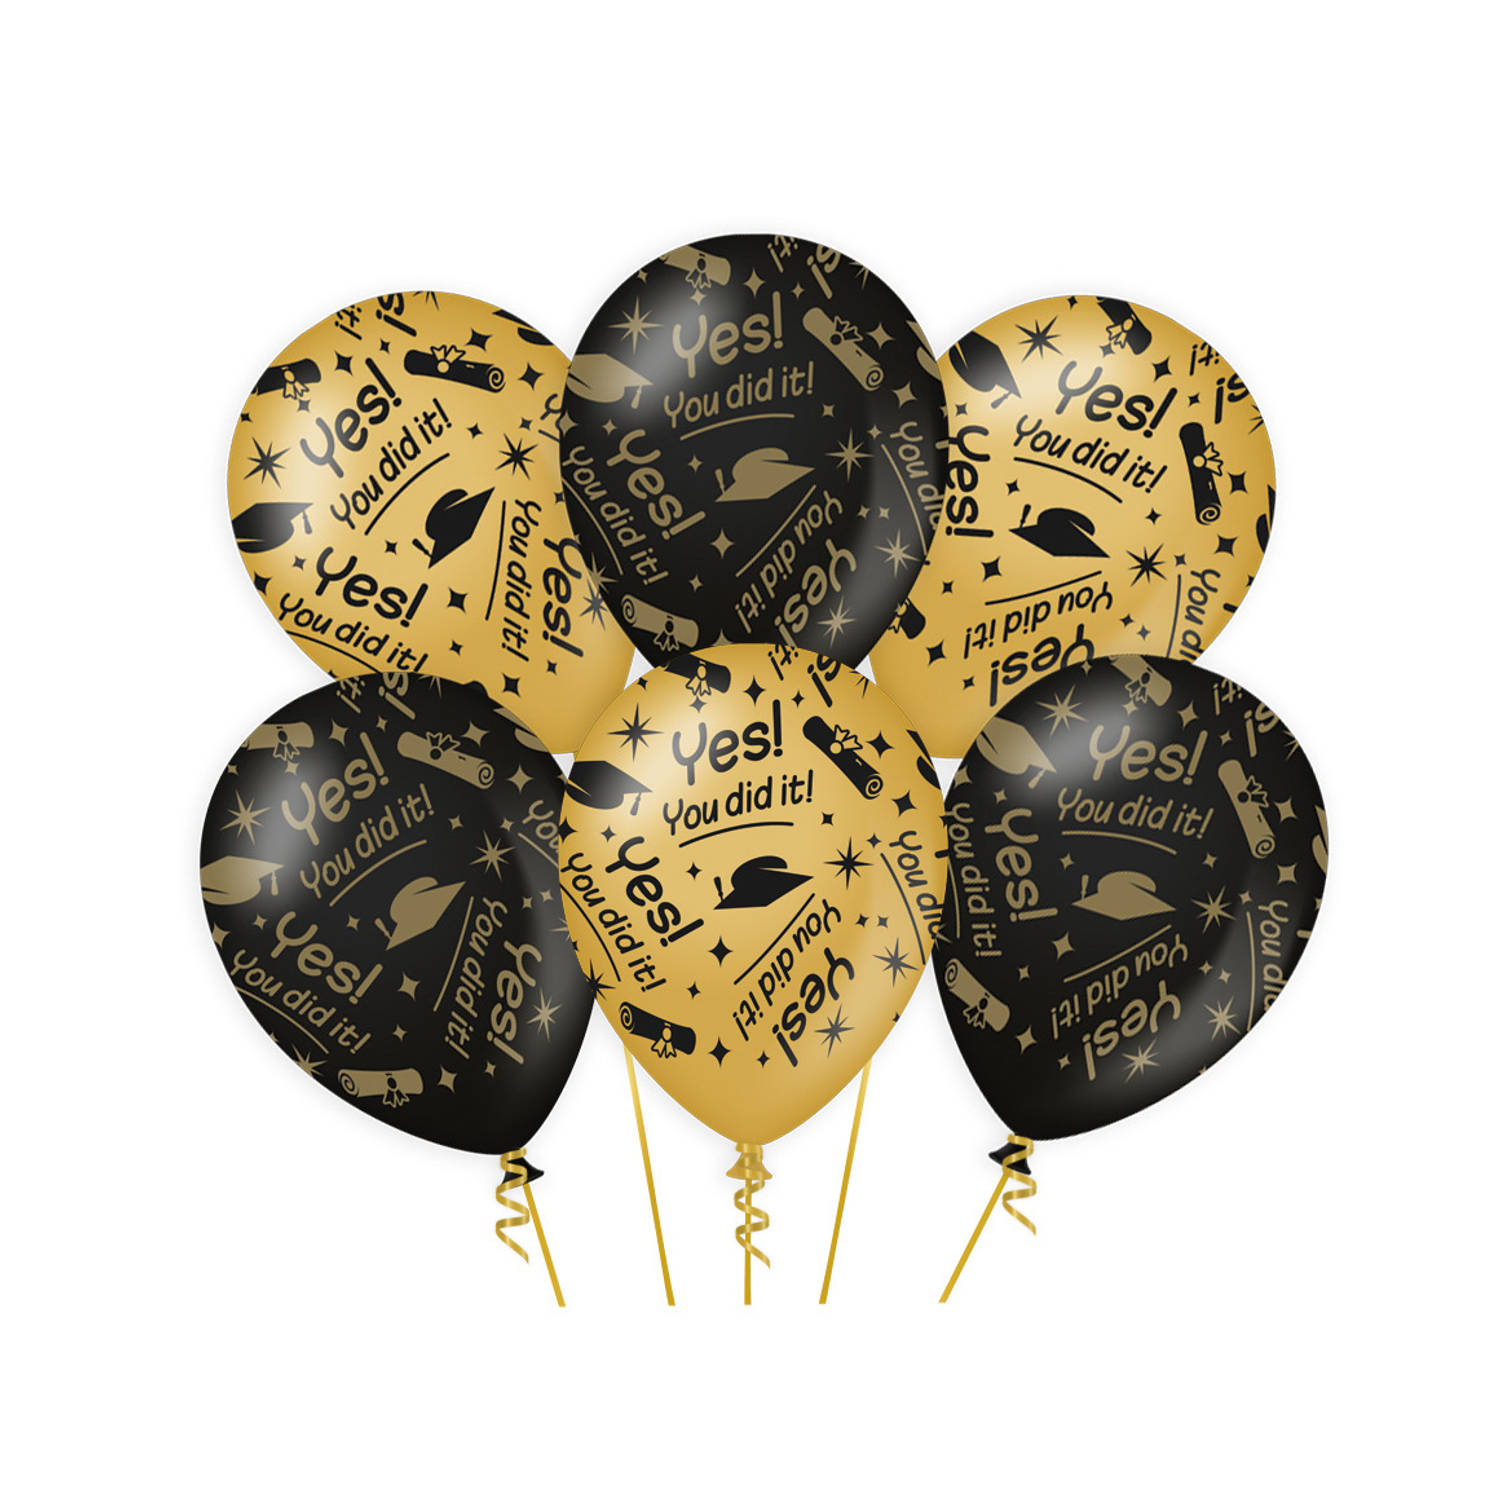 Paperdreams Geslaagd thema party Ballonnen - 12x - zwart/goud - You did it - Ballonnen